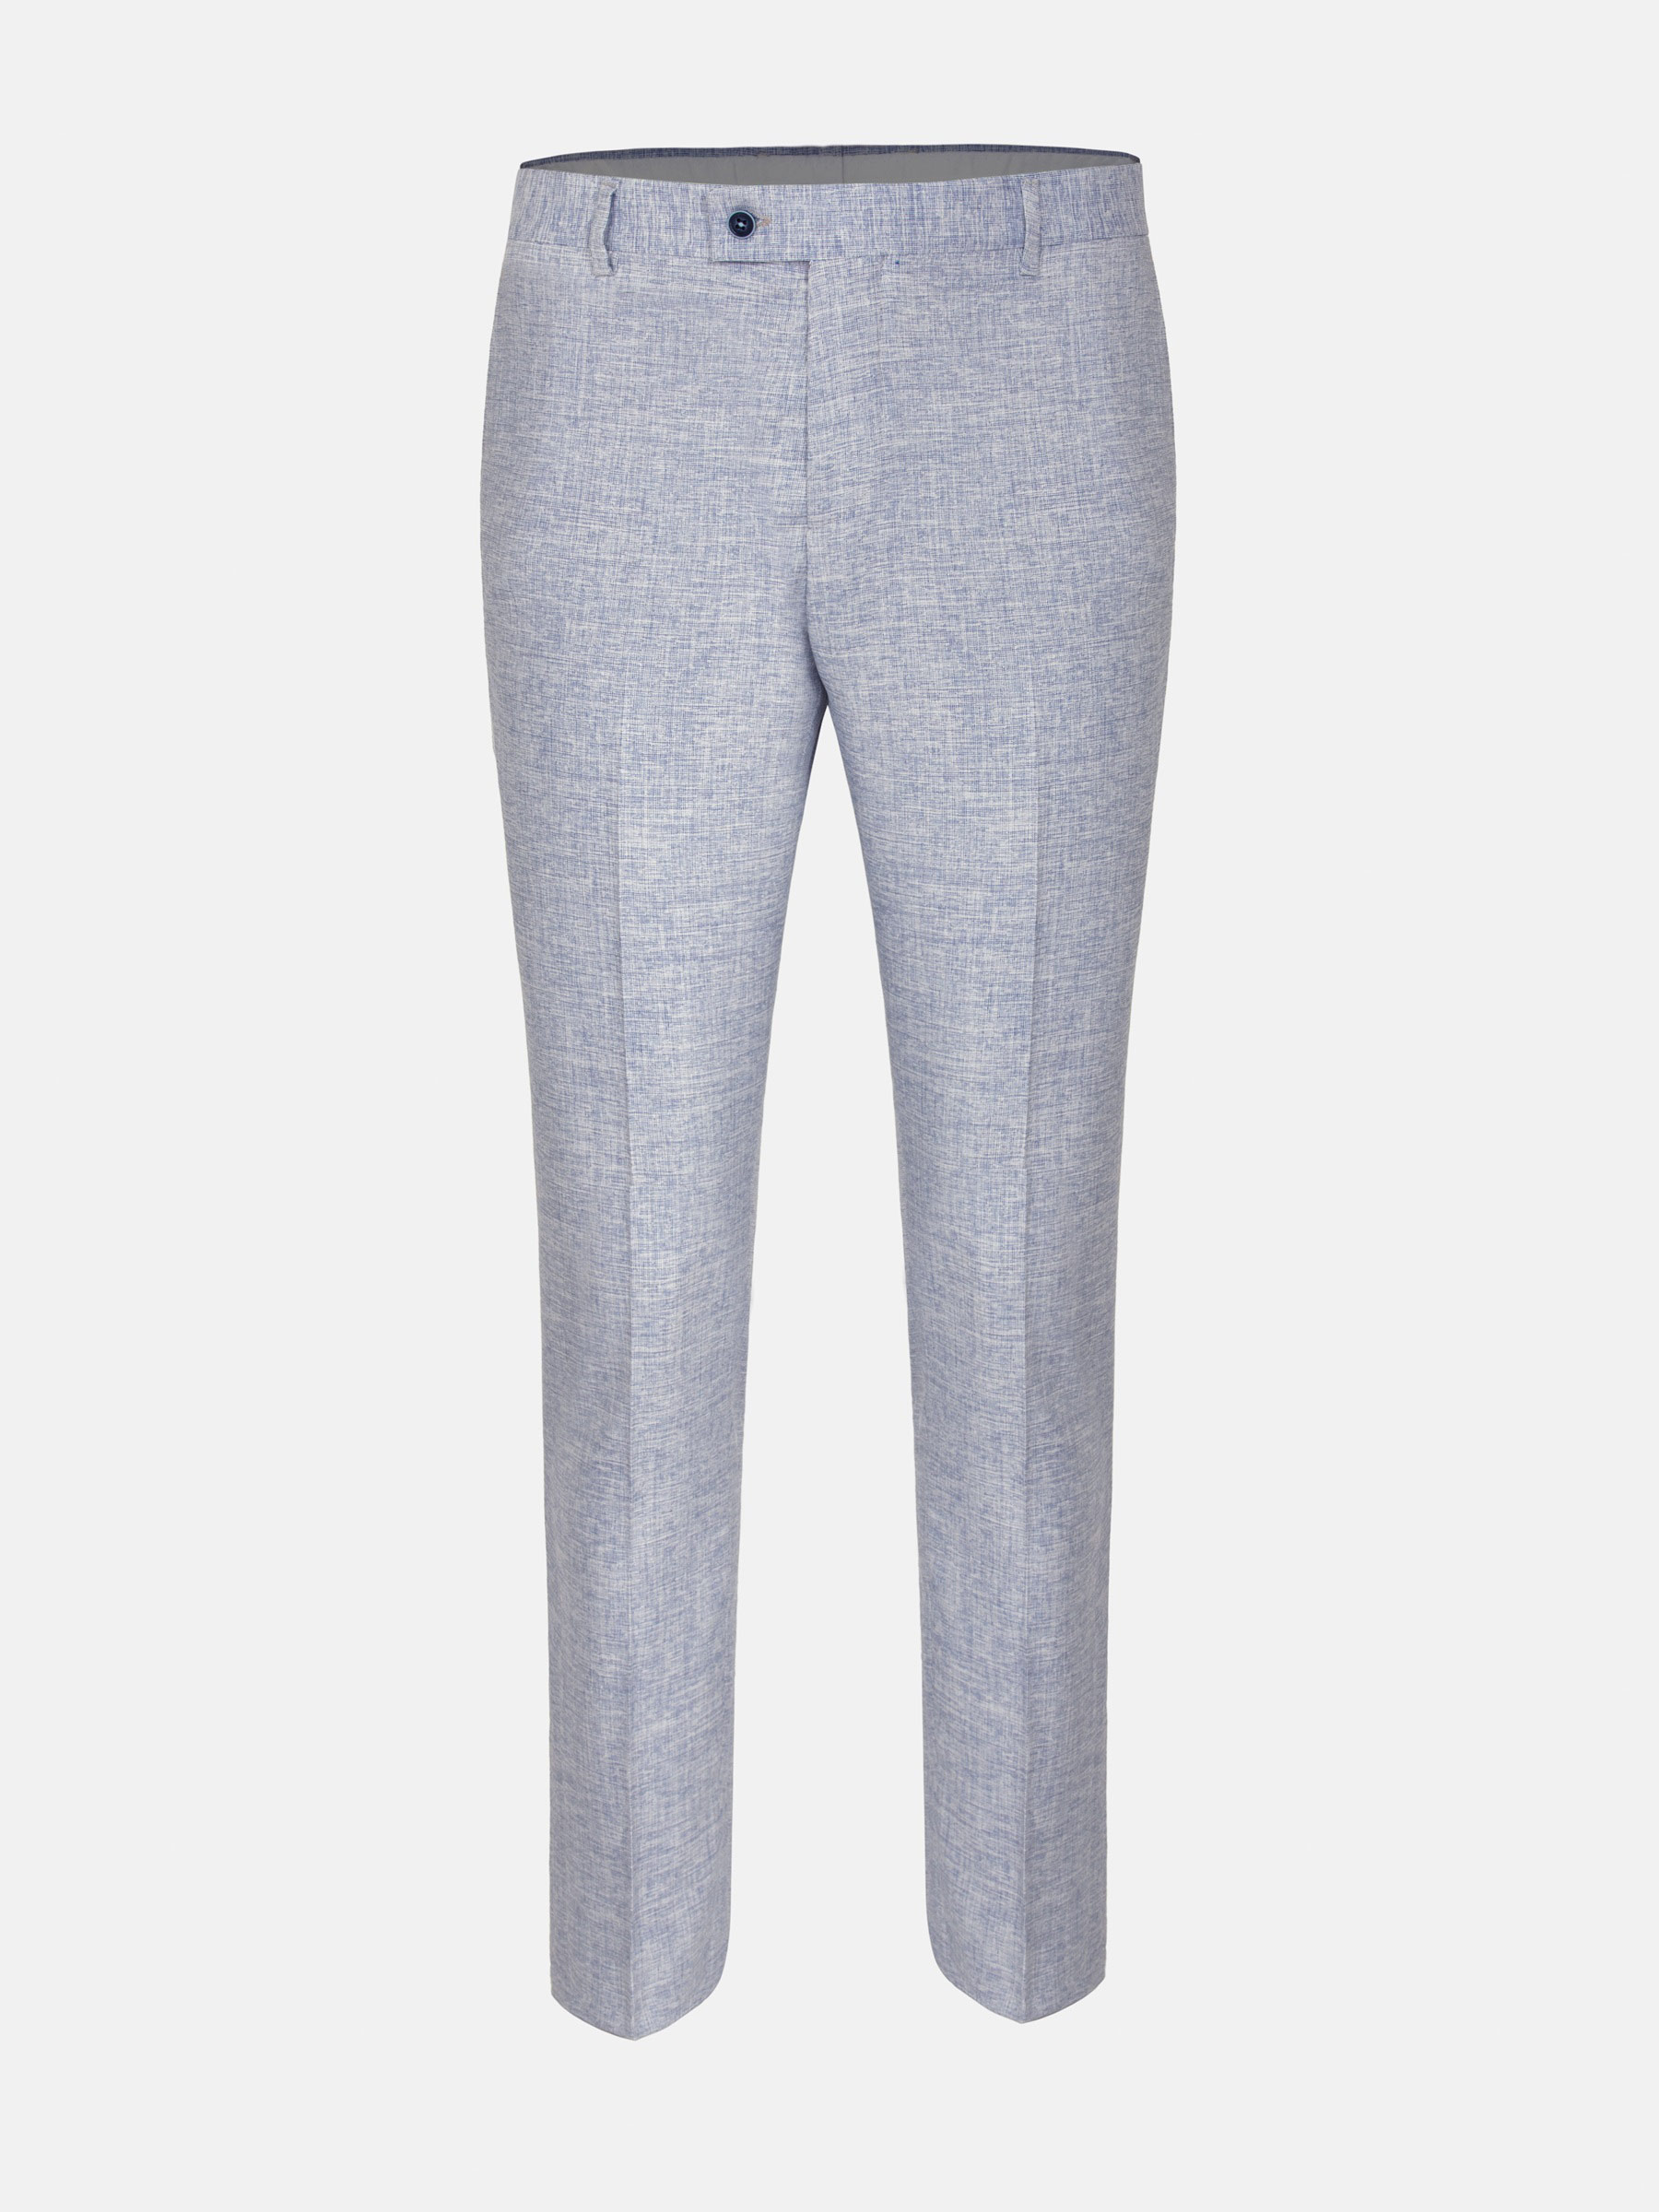 WAM Denim Suit Pantalon 70112 Navy-